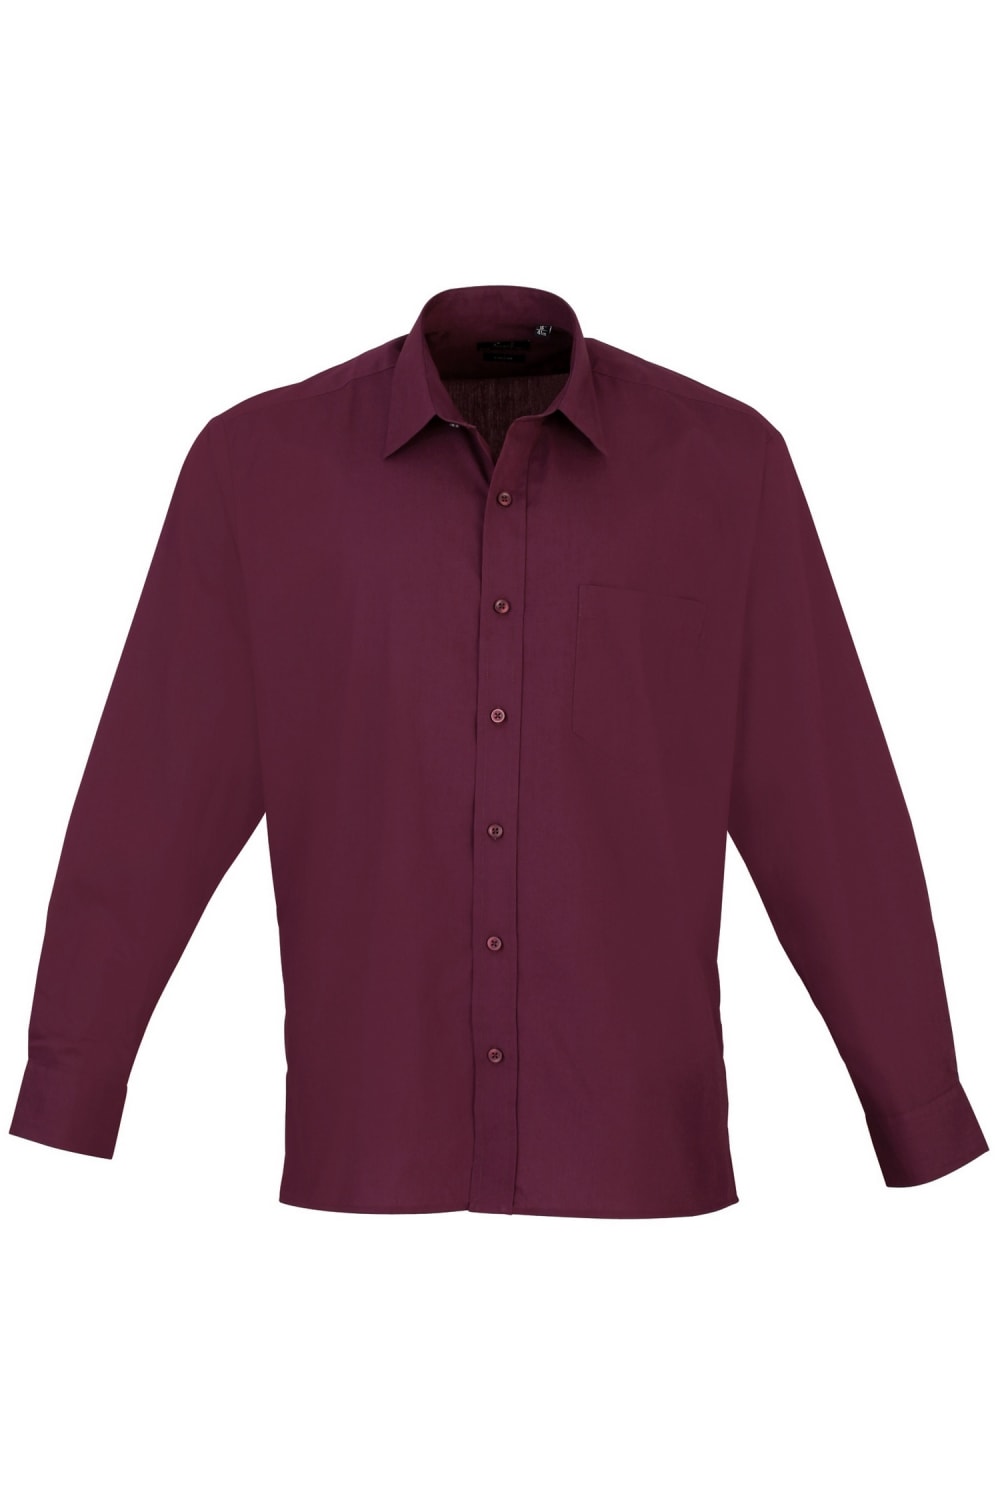 Premier Mens Long Sleeve Formal Plain Work Poplin Shirt (Aubergine)